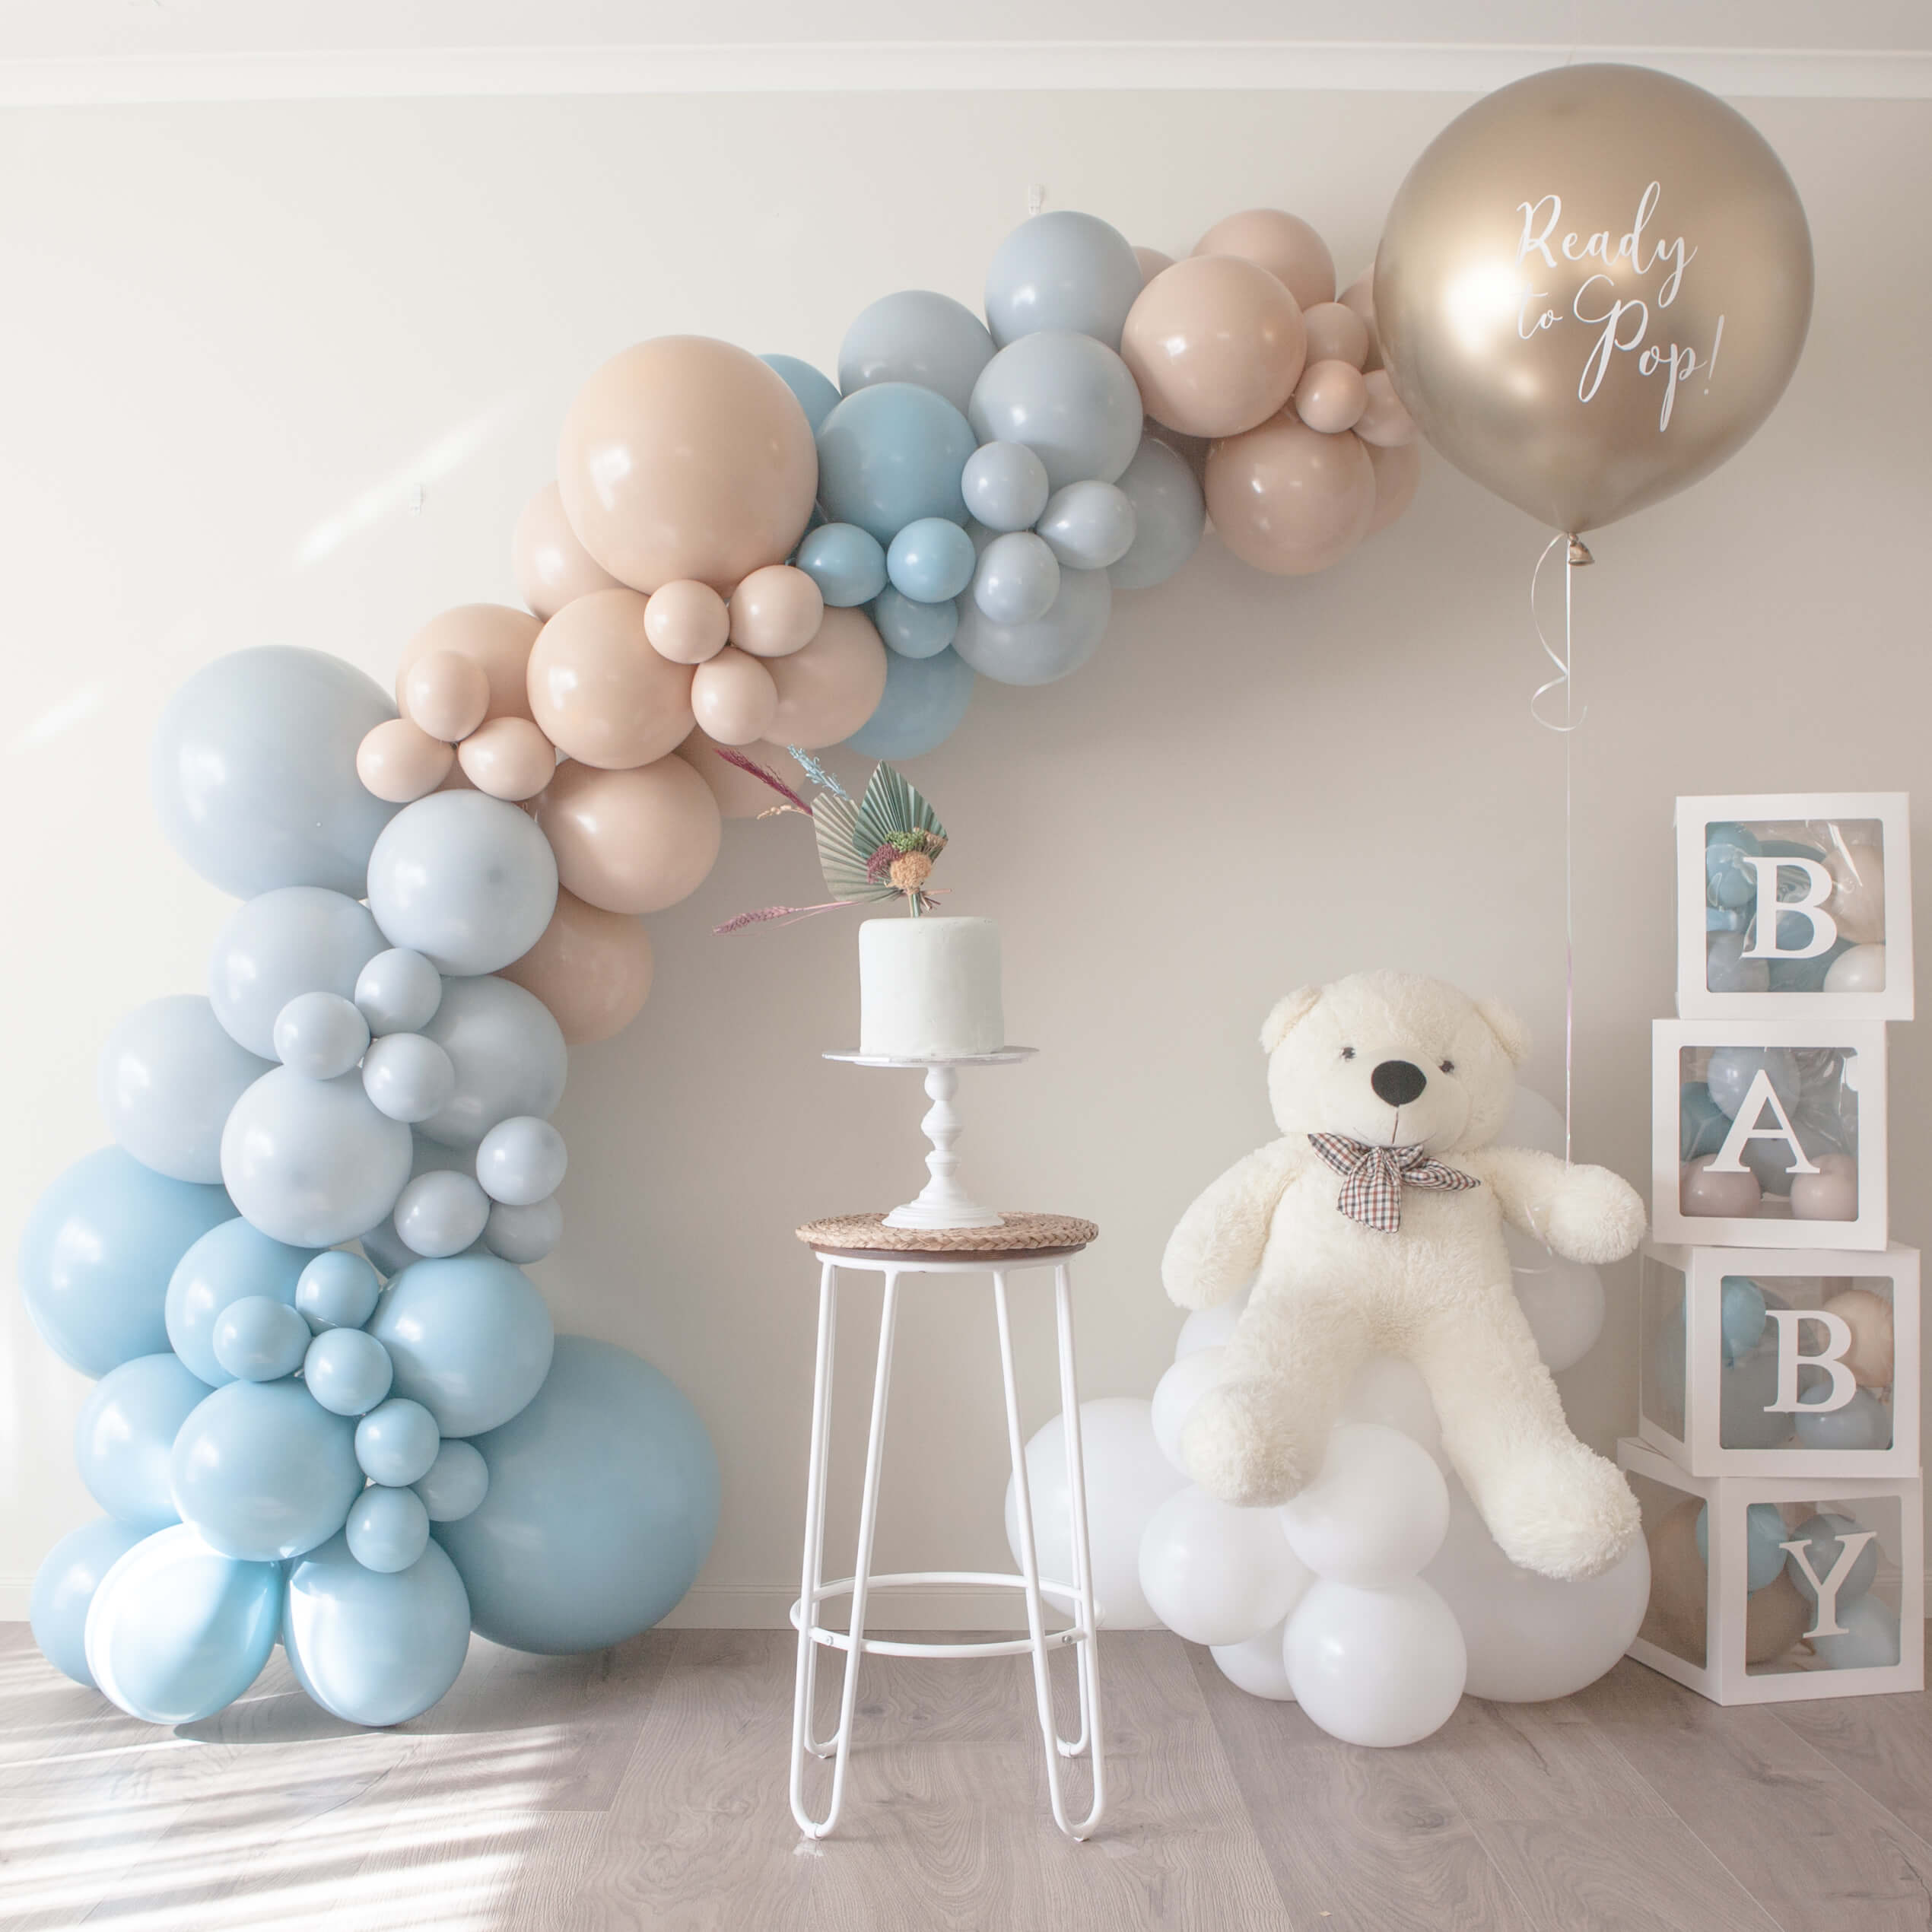 We Can't Bearly Wait Gender Reveal Balloon Garland DIY Kit - Seaglass & Blush